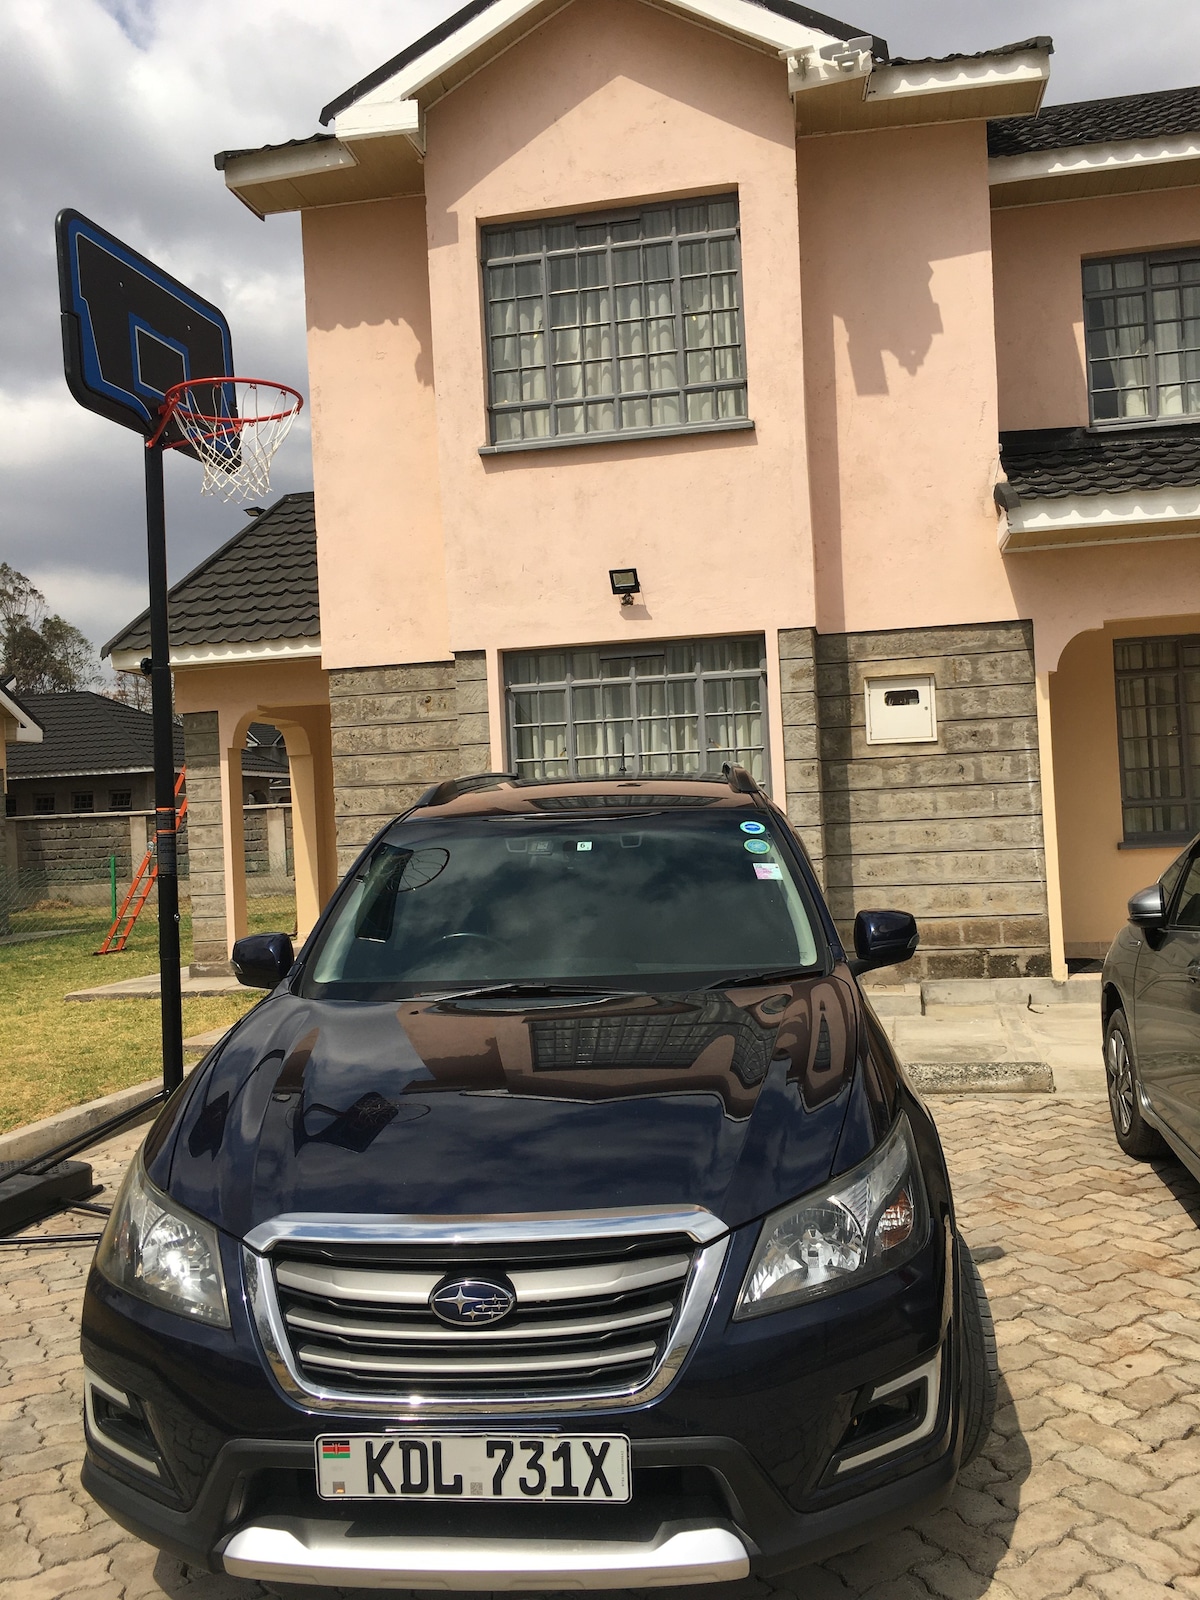 Diaspora/Expatriate Car and Furnished House Combo